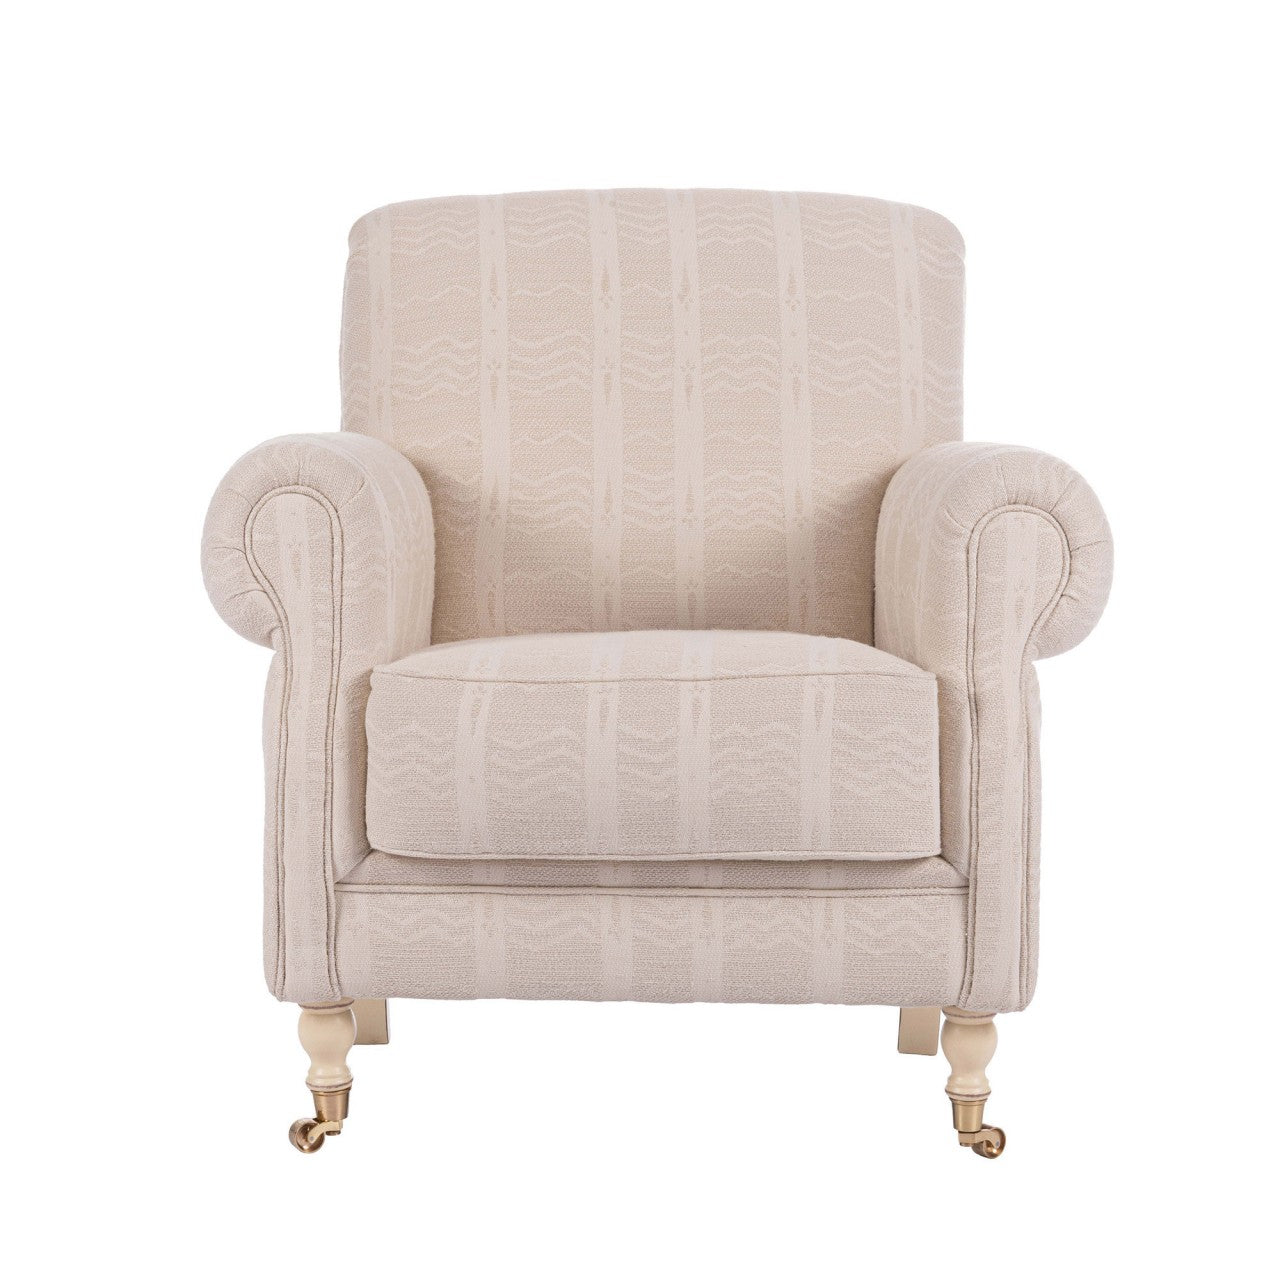 KINGSTON CHAIR - WHITELAKE Jacquard Woven Fabric_Furniture_Mindthegap